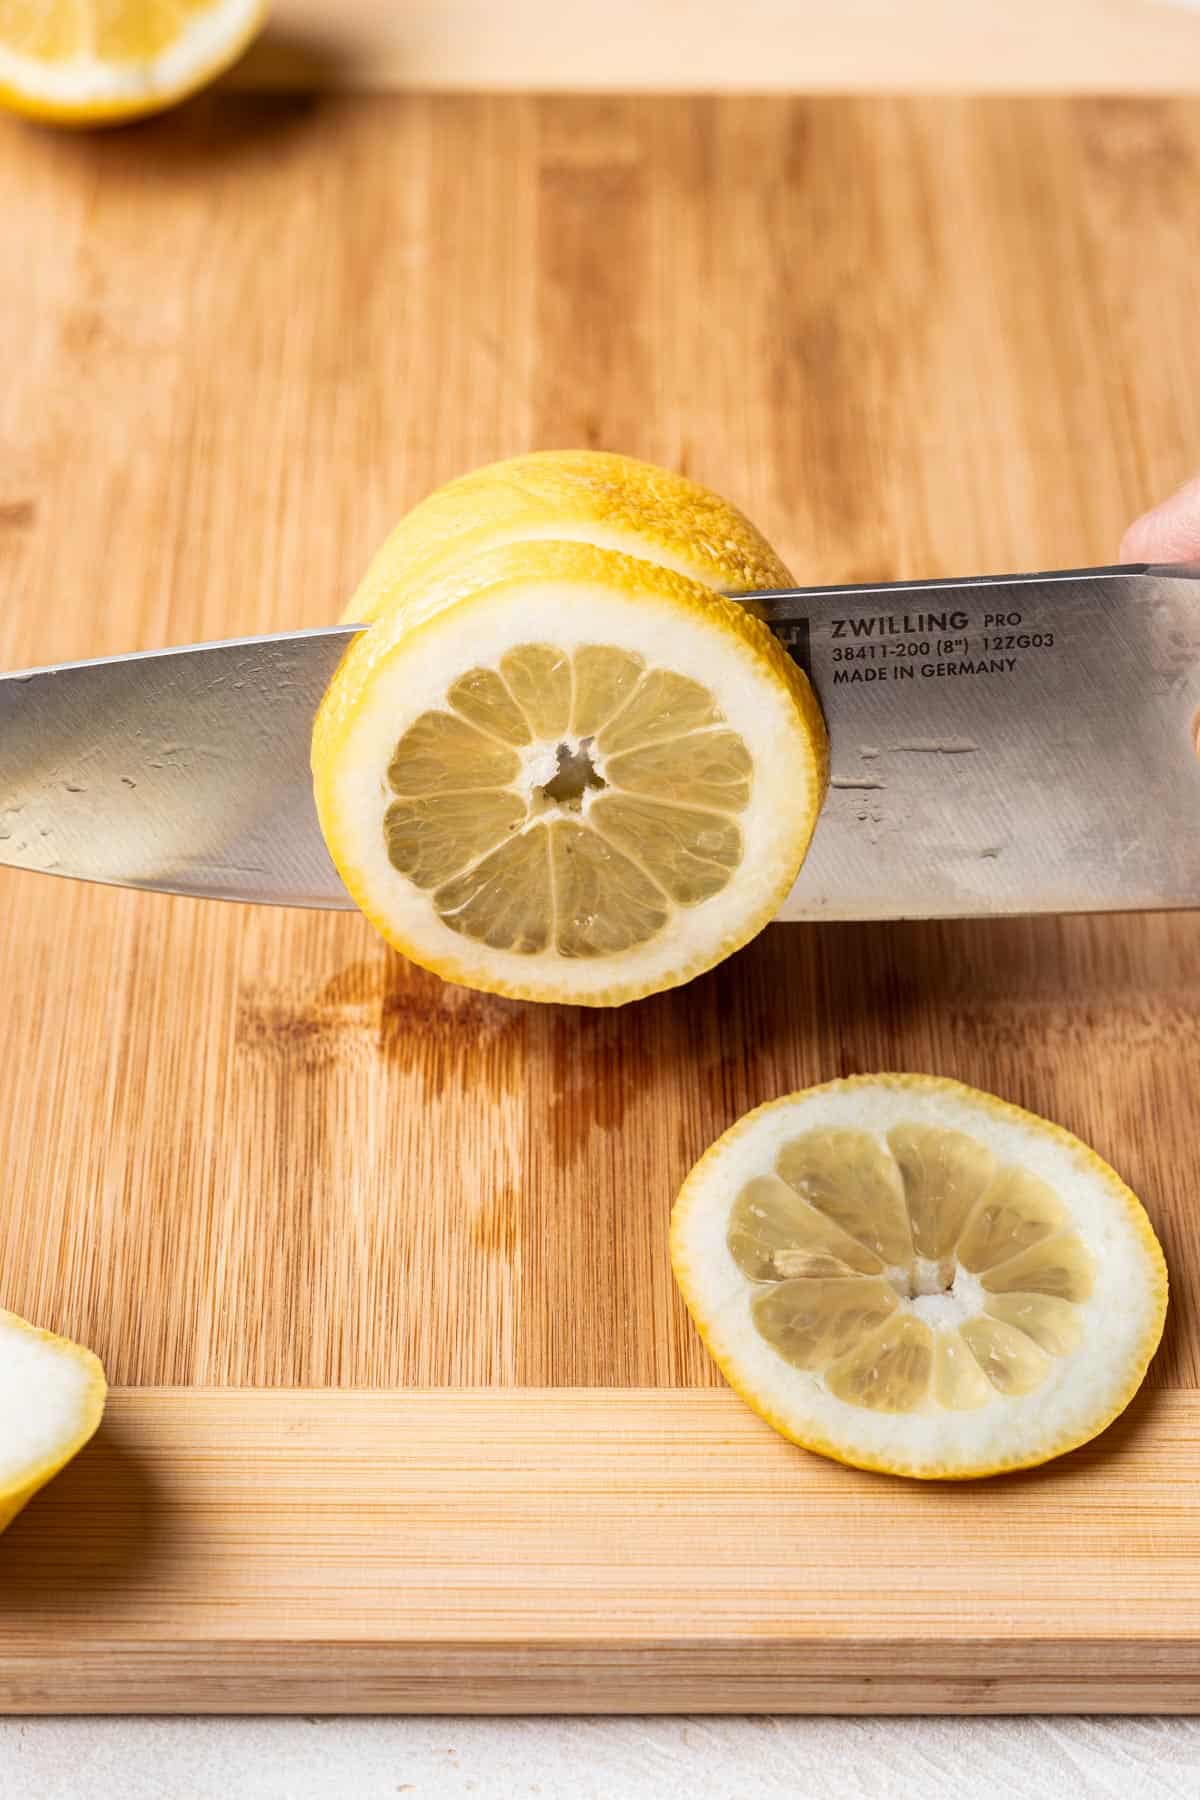 A sharp chef's knife cutting lemon slices.